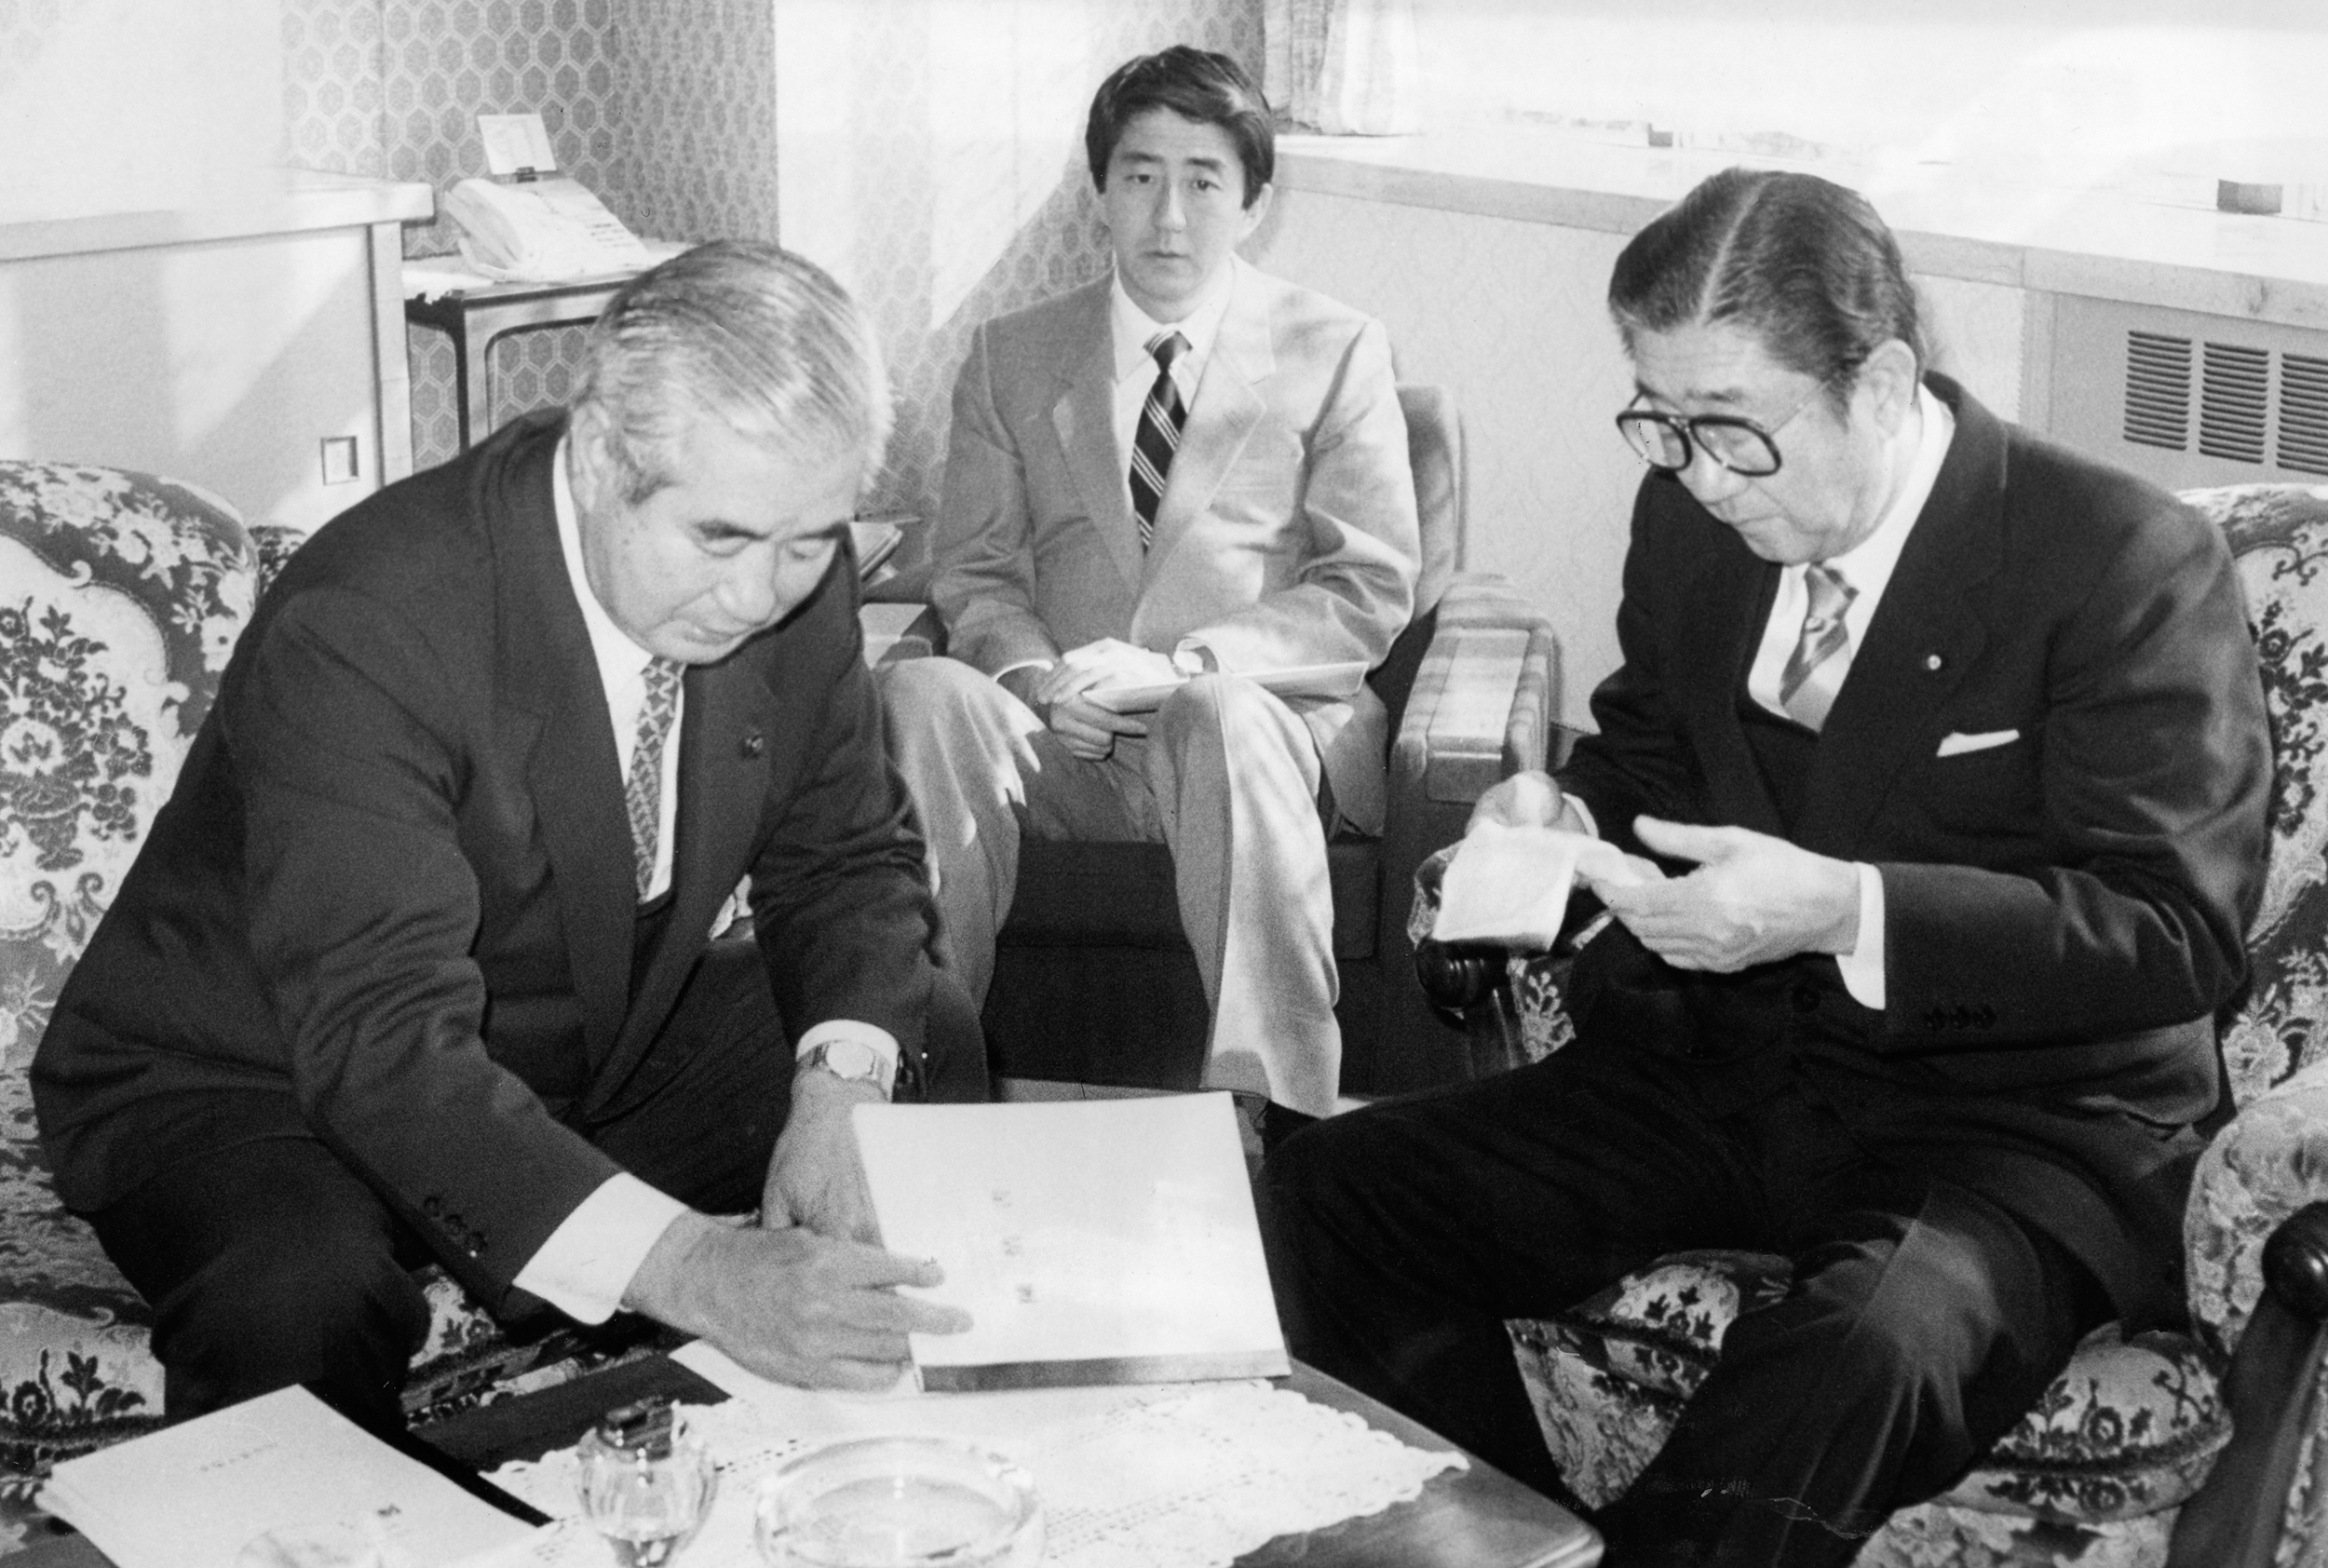 Liberal Democratic Party secretary general Shintaro Abe, right, and his son and secretary Shinzo Abe, center, visit their hometown Shimonoseki mayor Yoshitsugu Izumida, left, at Shimonoseki City Hall on January 16, 1988, in Shimonoseki, Yamaguchi, Japan. 